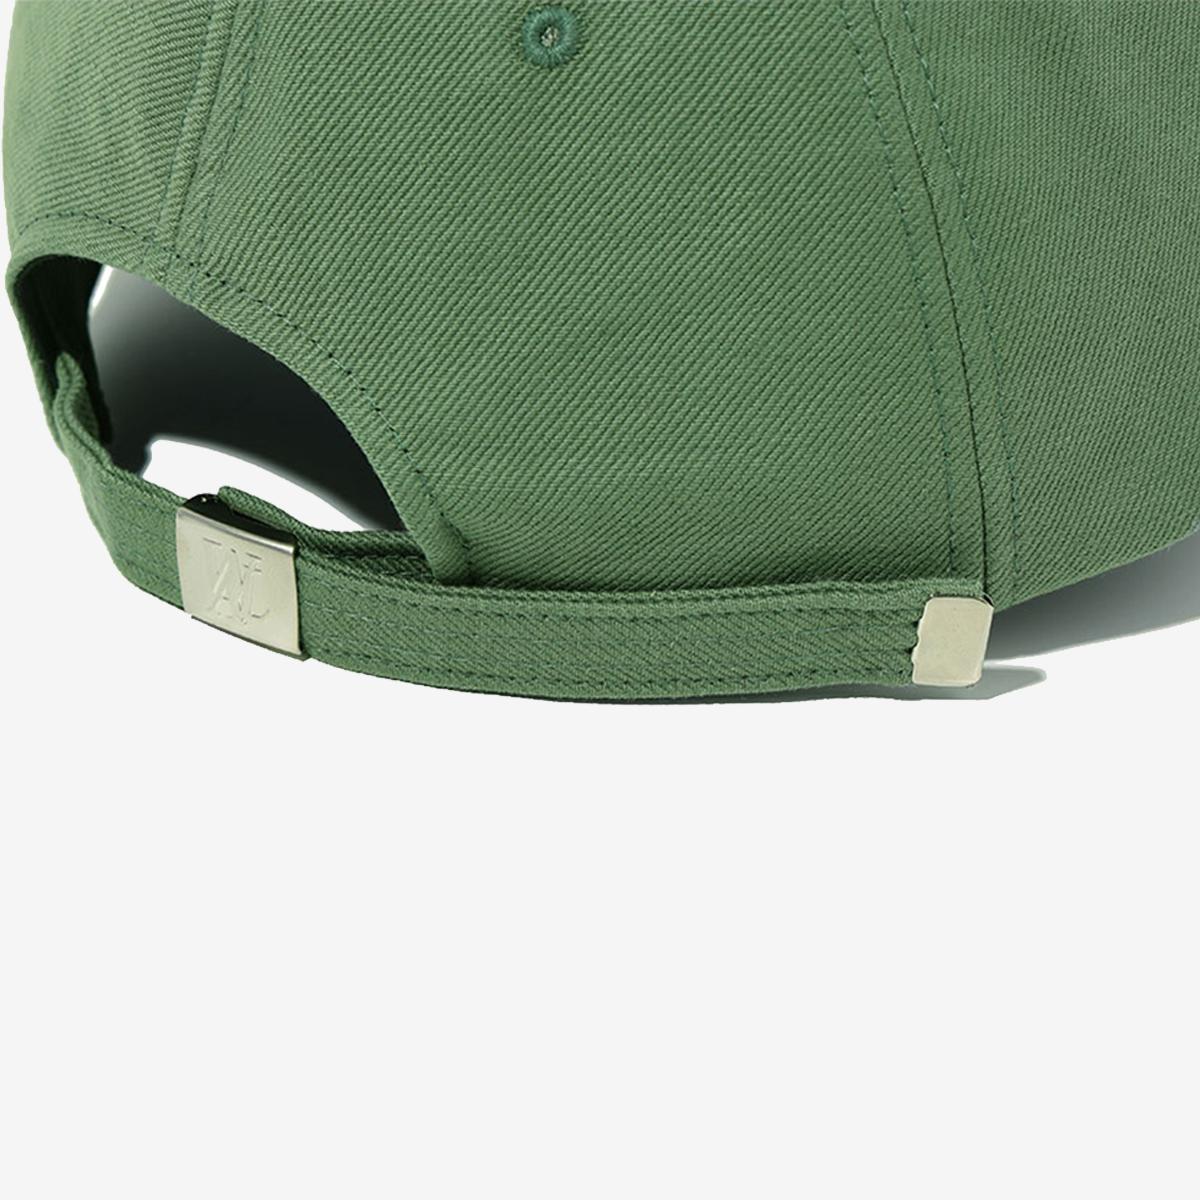 Signature Logo棒球帽（灰綠色）